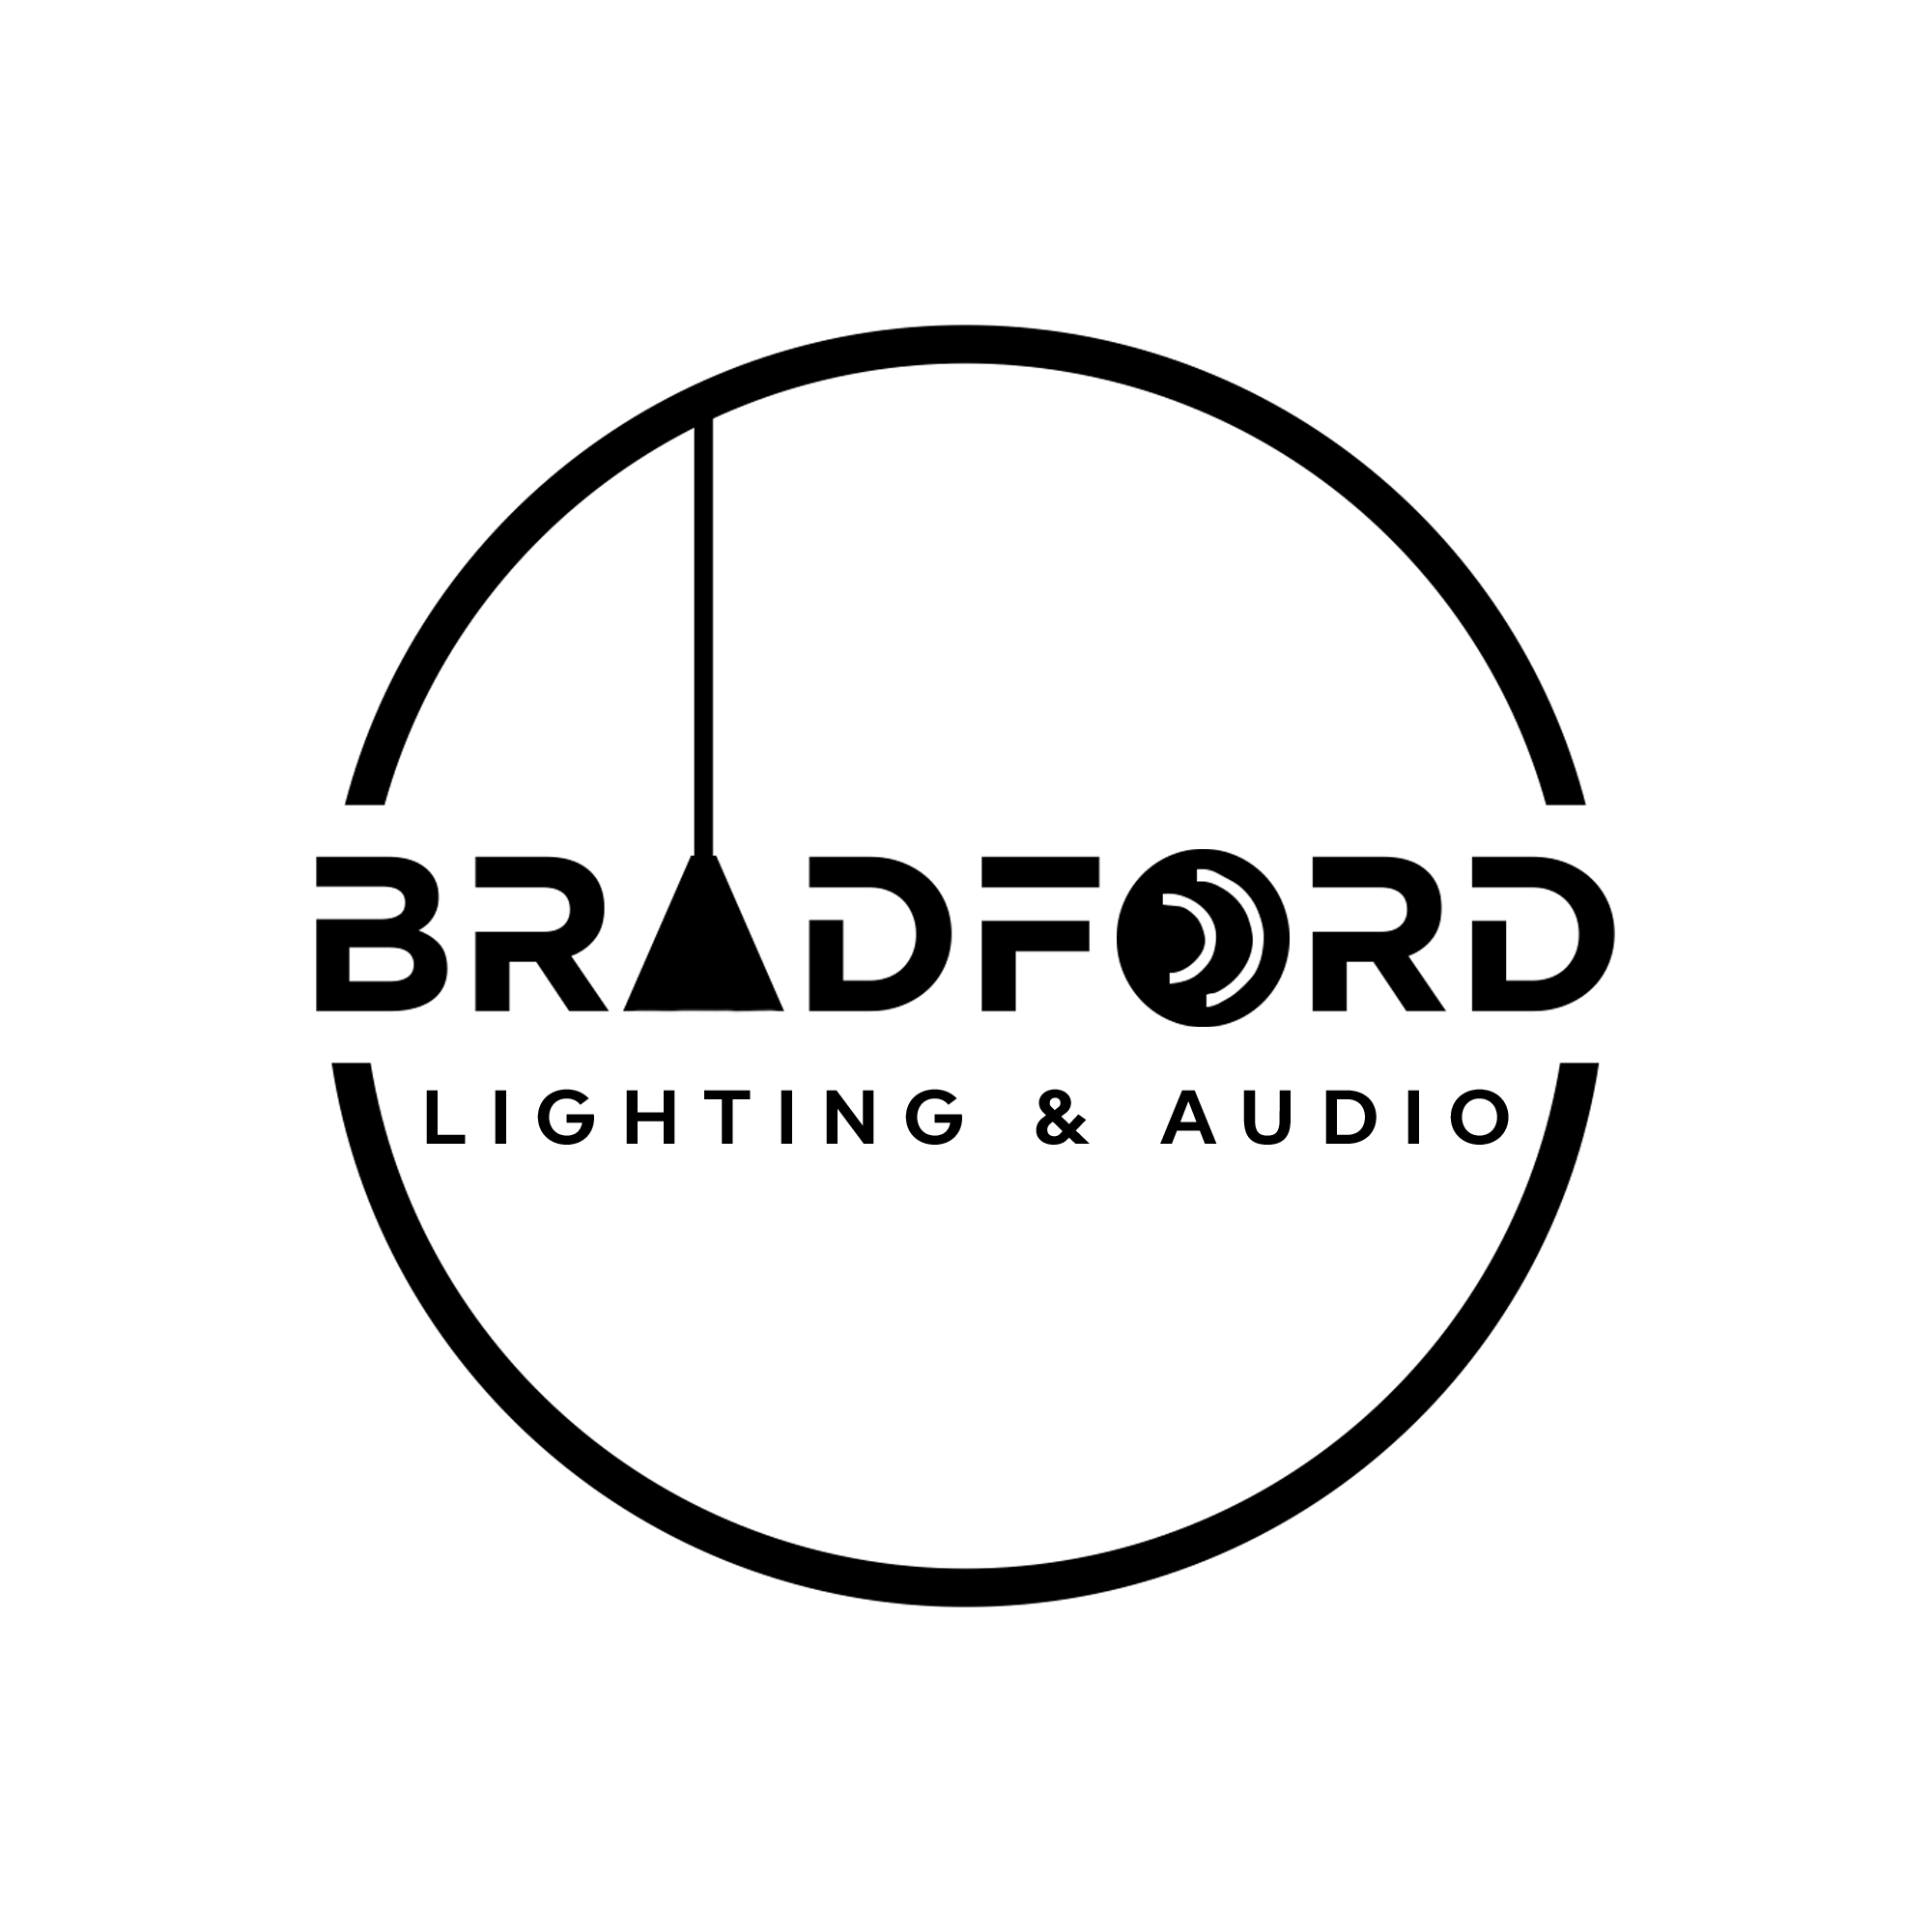 Bradford Lighting Logo